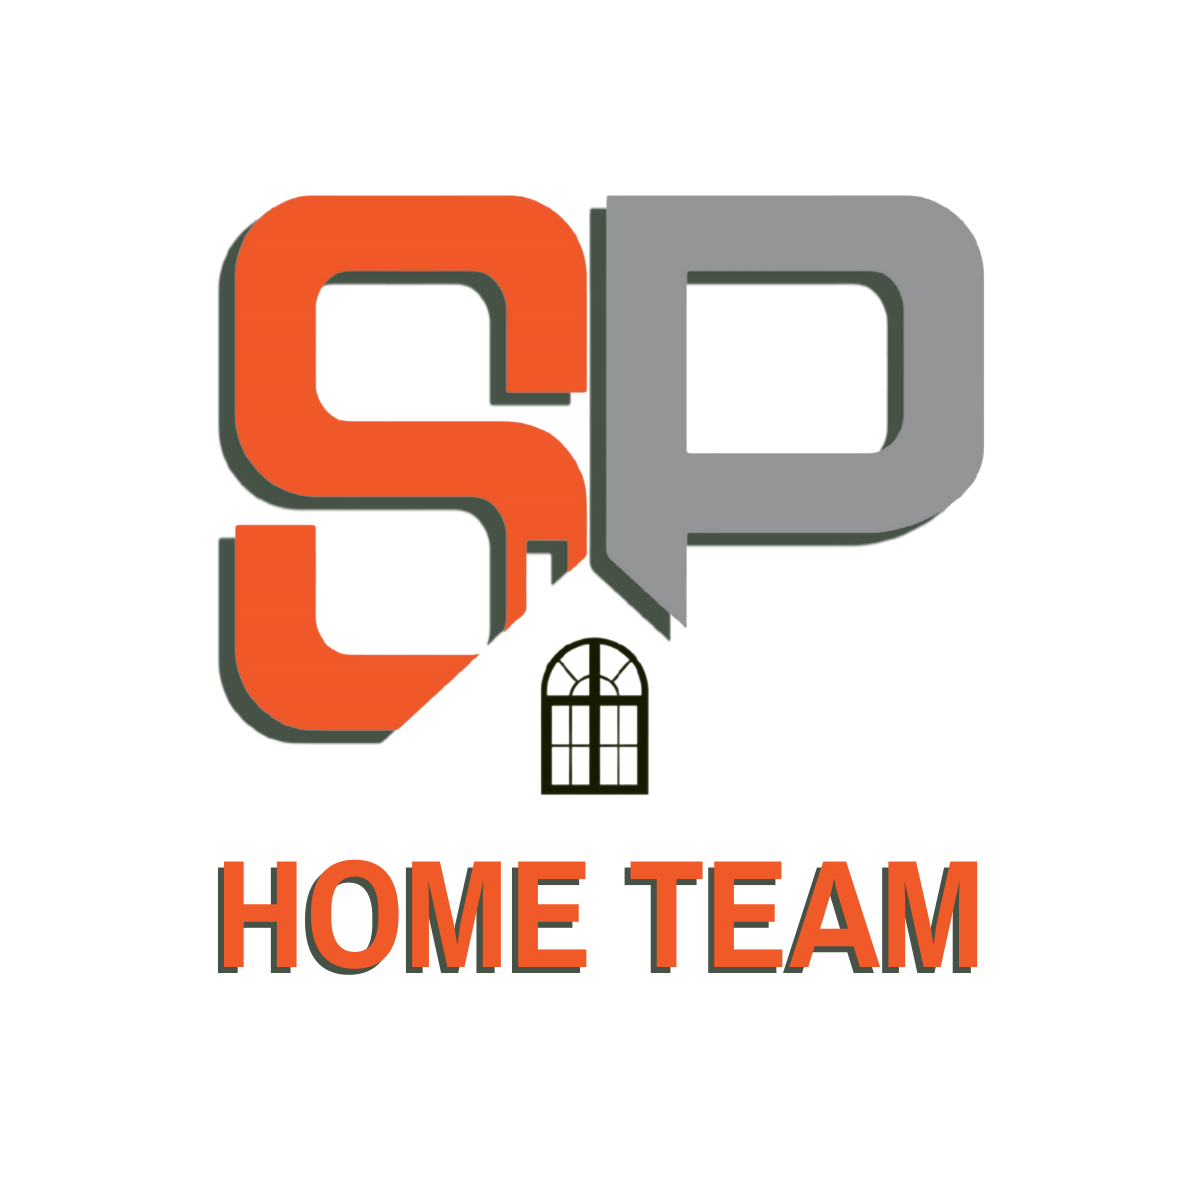 The SP Home Team